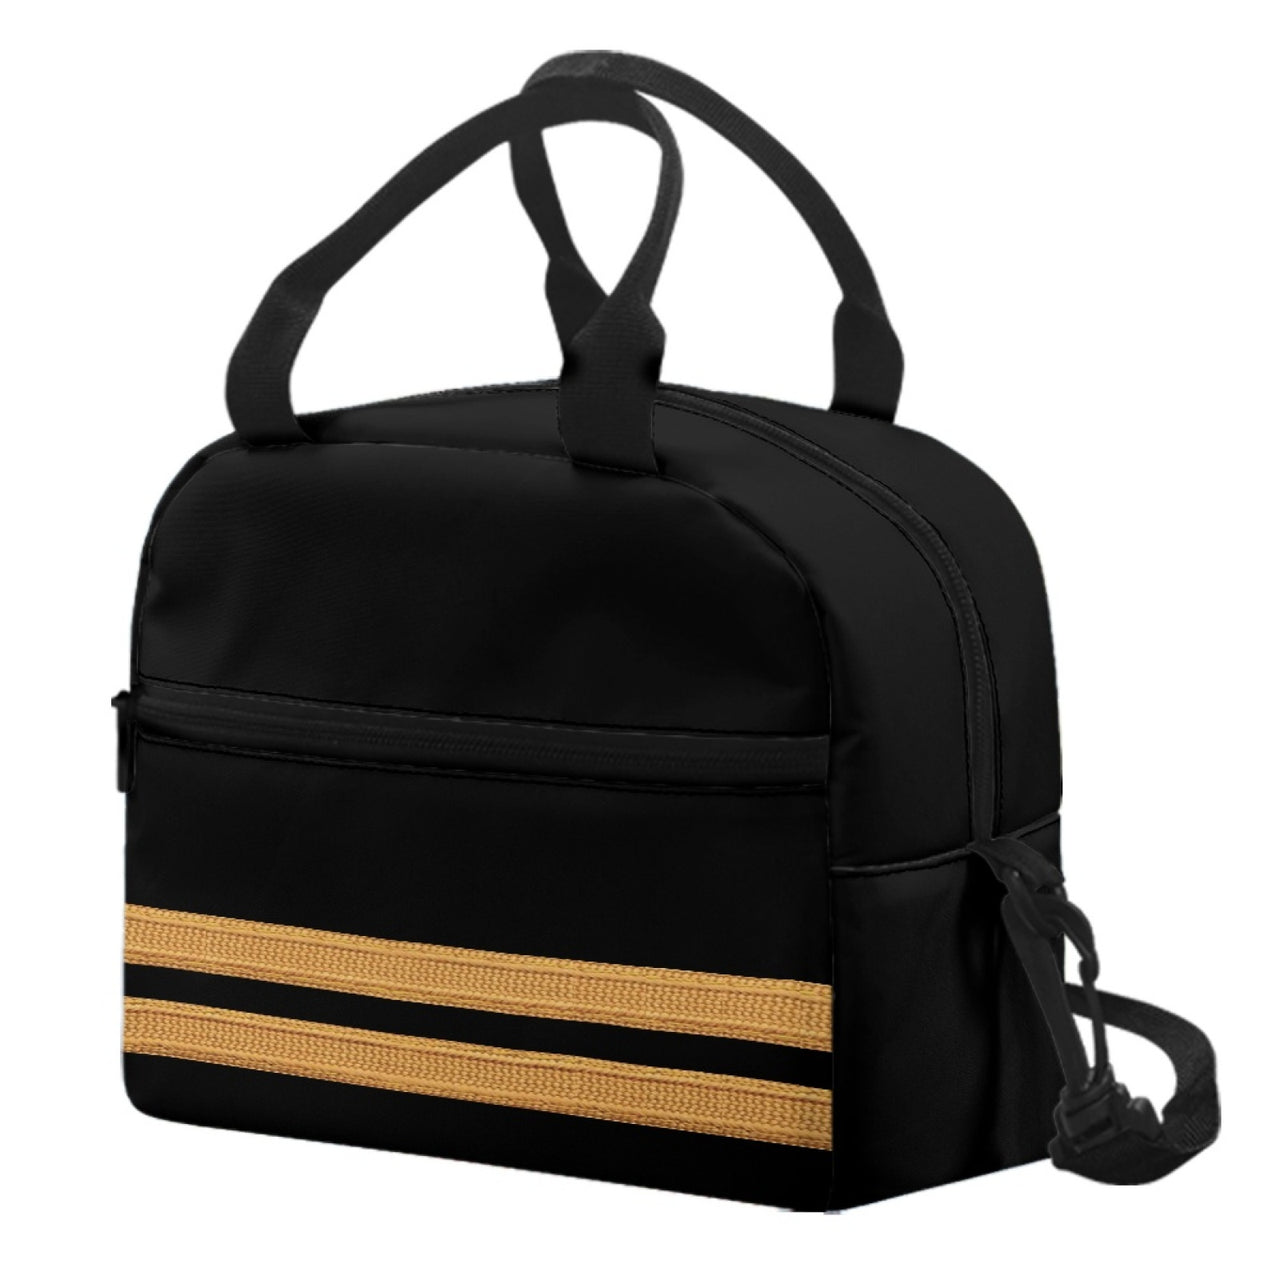 Golden Pilot Epaulettes (4,3,2 Lines) Designed Lunch Bags